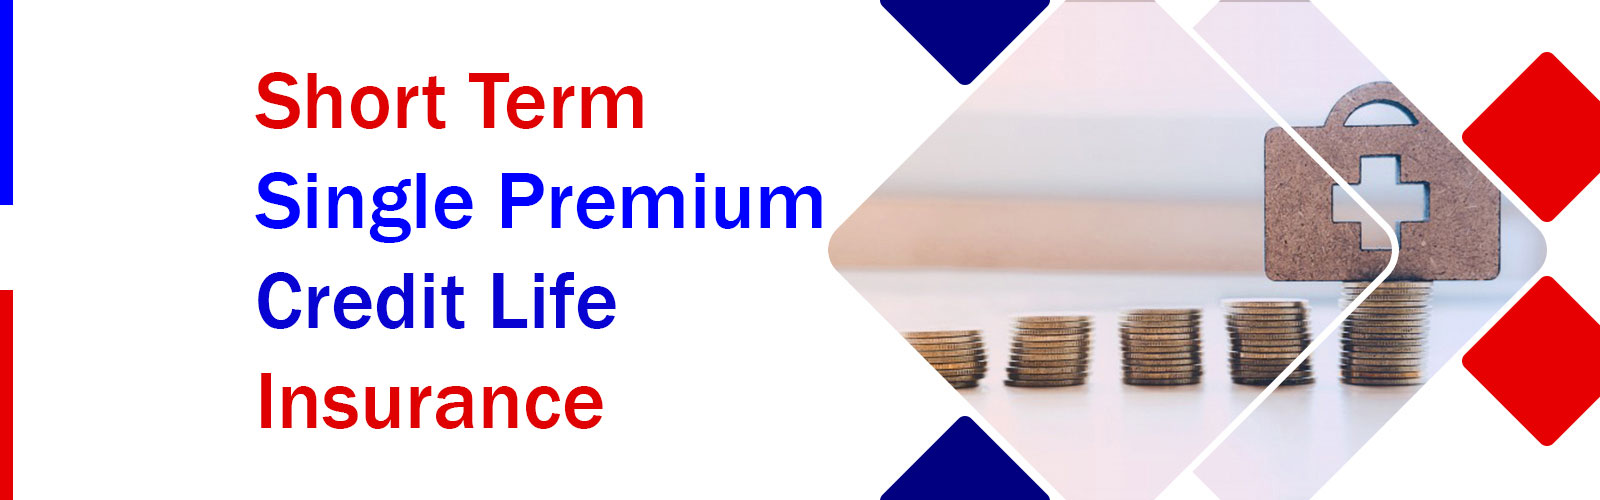 Short Term Single Premium Credit Life Insurance Capital Taiyo Life